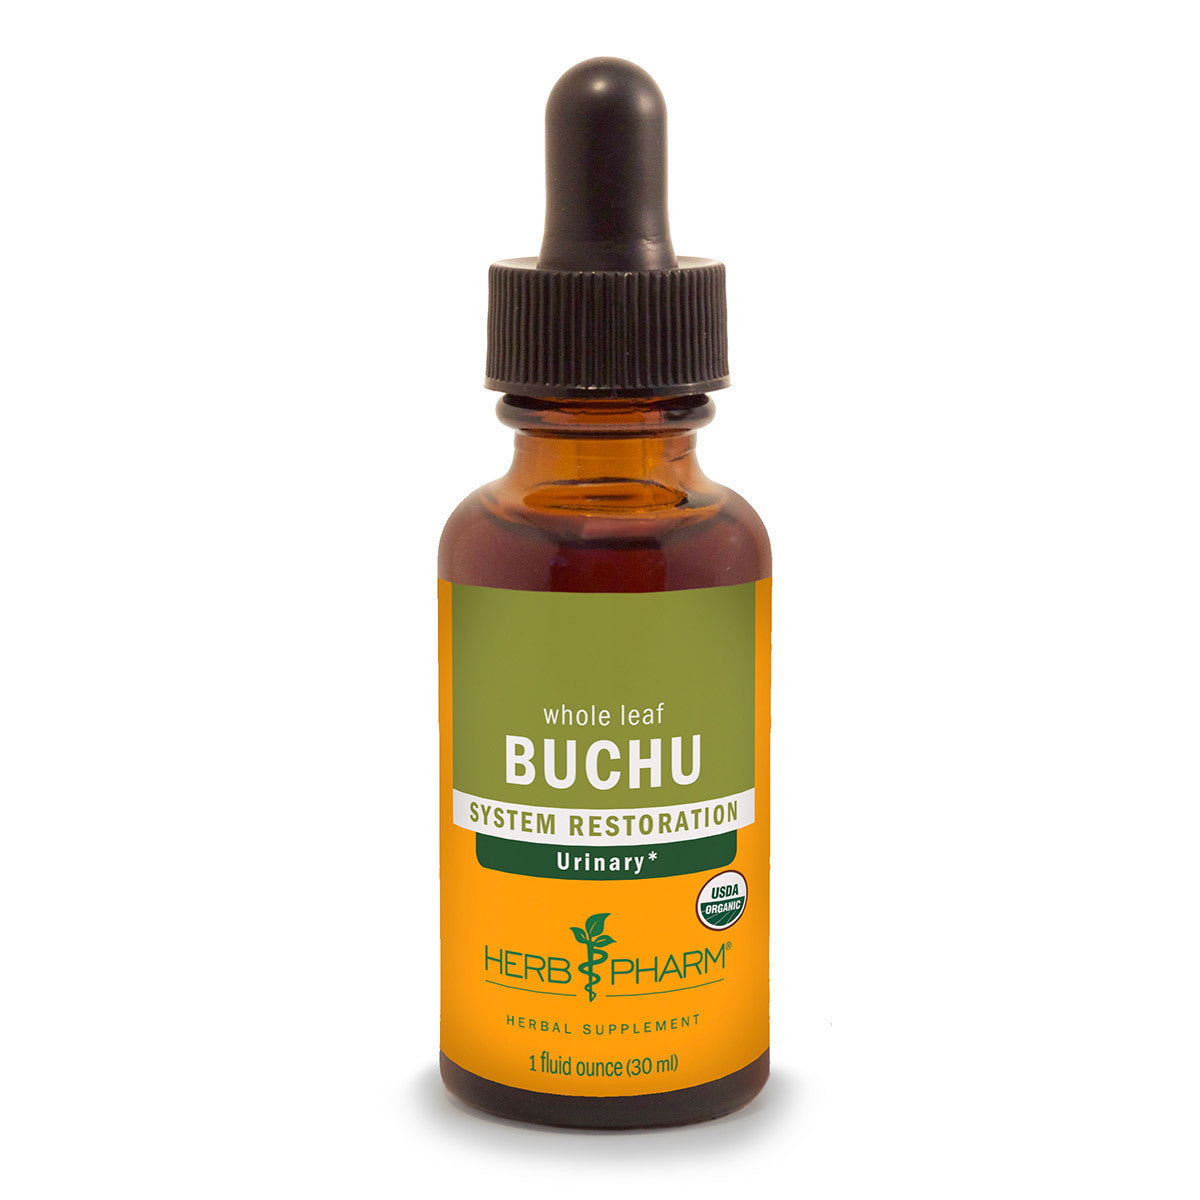 Primary image of Buchu Extract